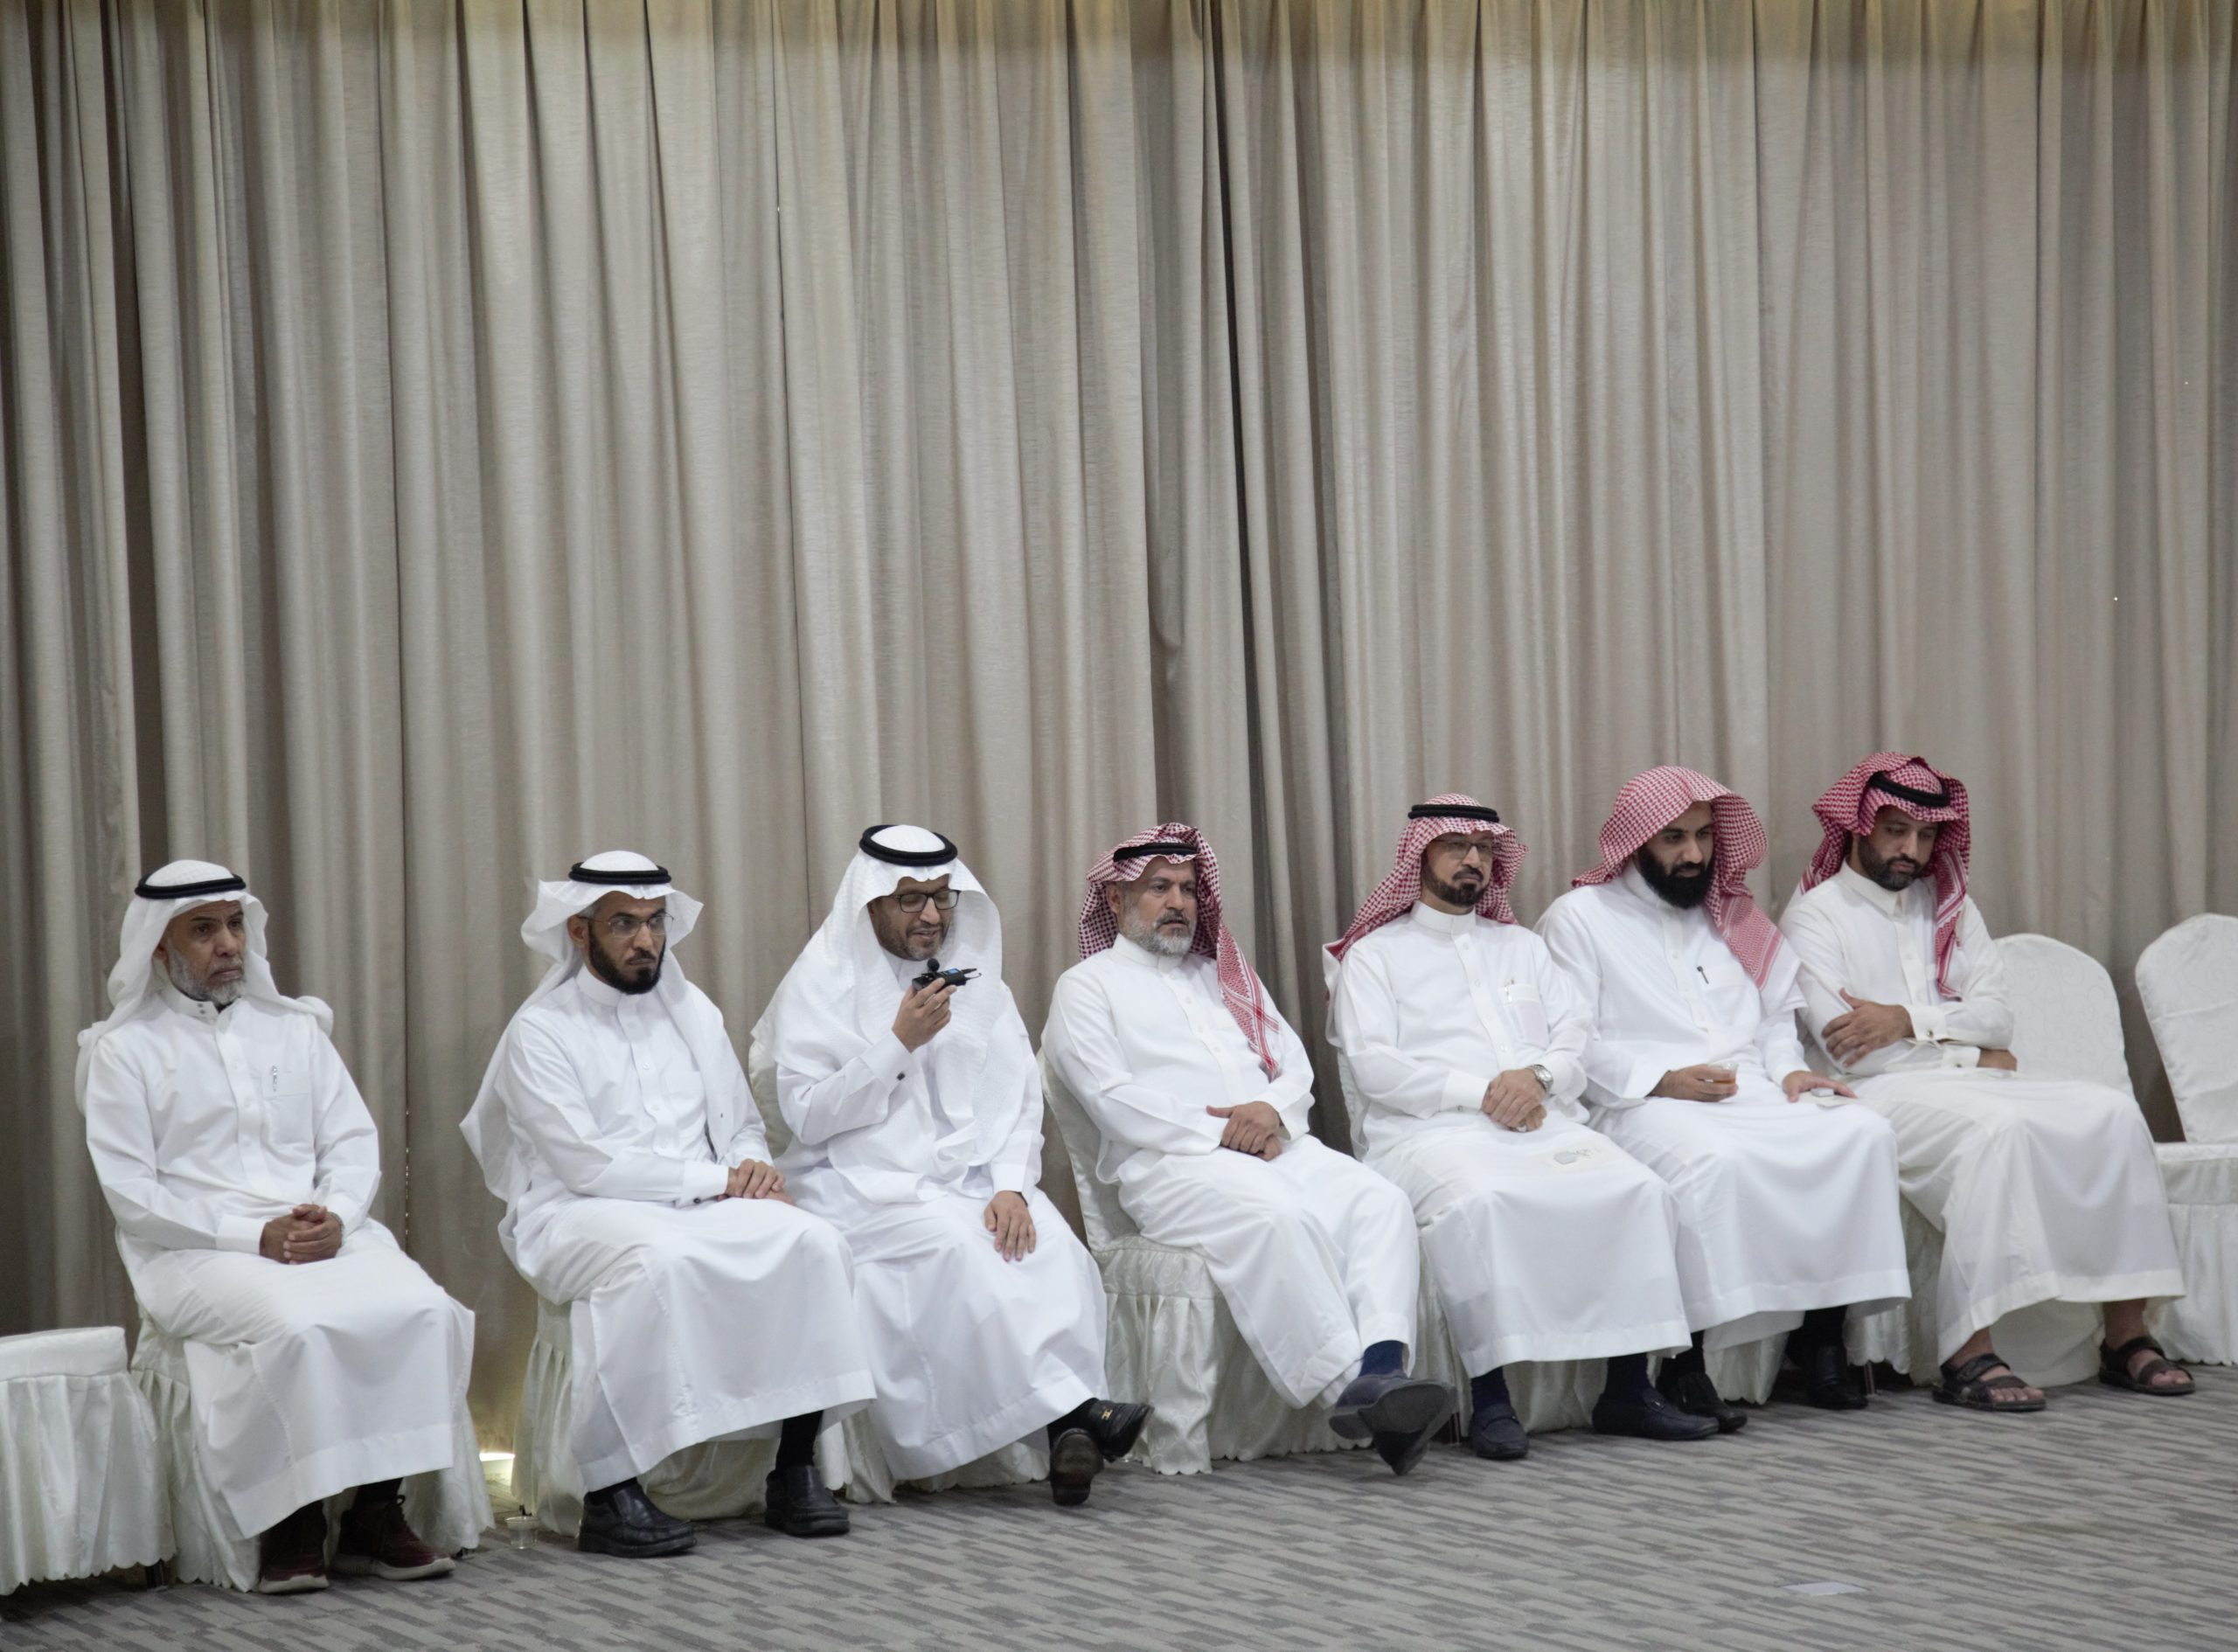 Mustaqbal University celebrates Eid al-Fitr with university leaders and staff in attendance